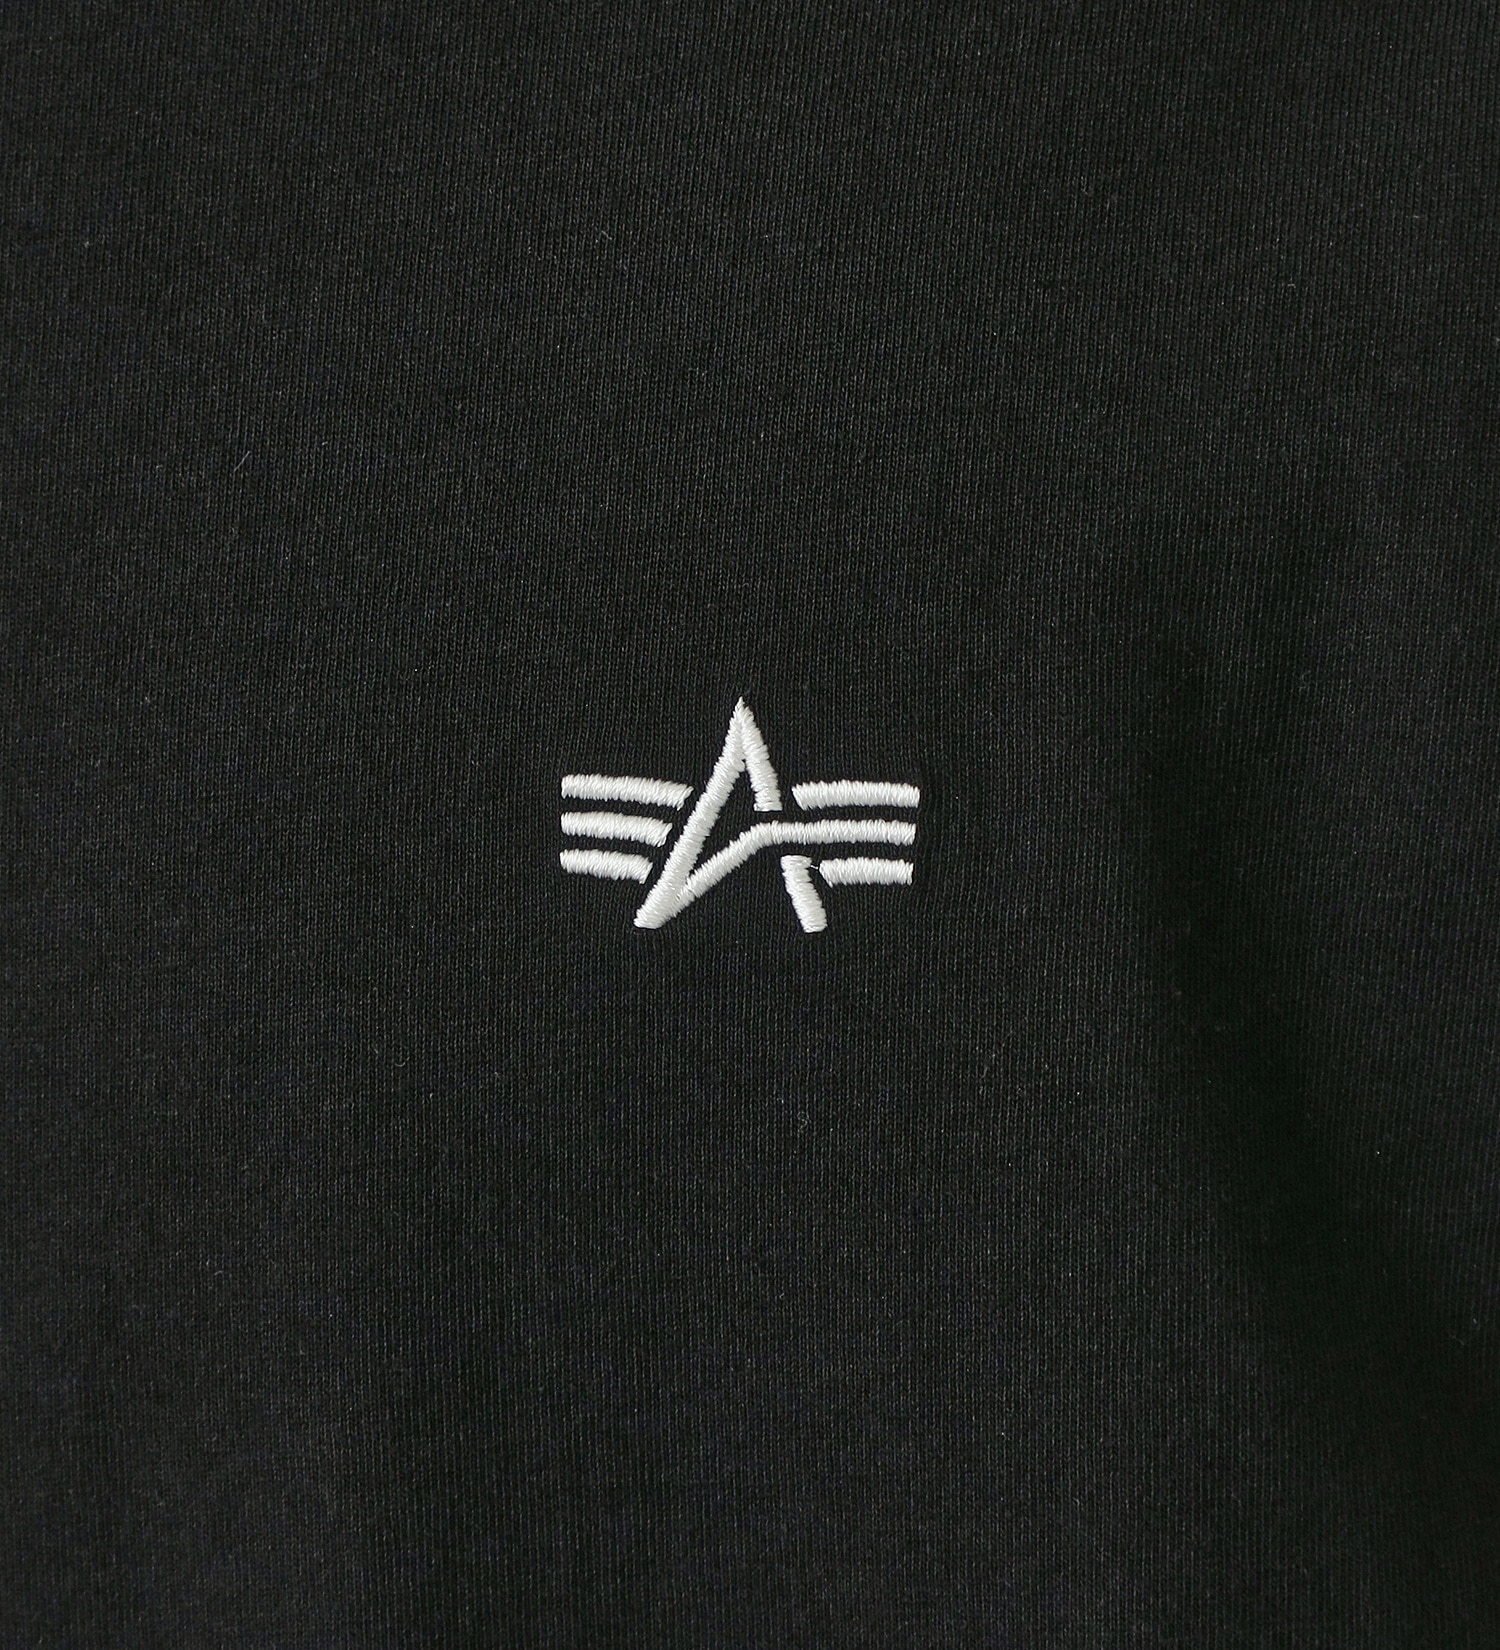 ALPHA(アルファ)の【GW SALE】バックプリントボックスロゴ 長袖Tシャツ|トップス/Tシャツ/カットソー/メンズ|ブラック